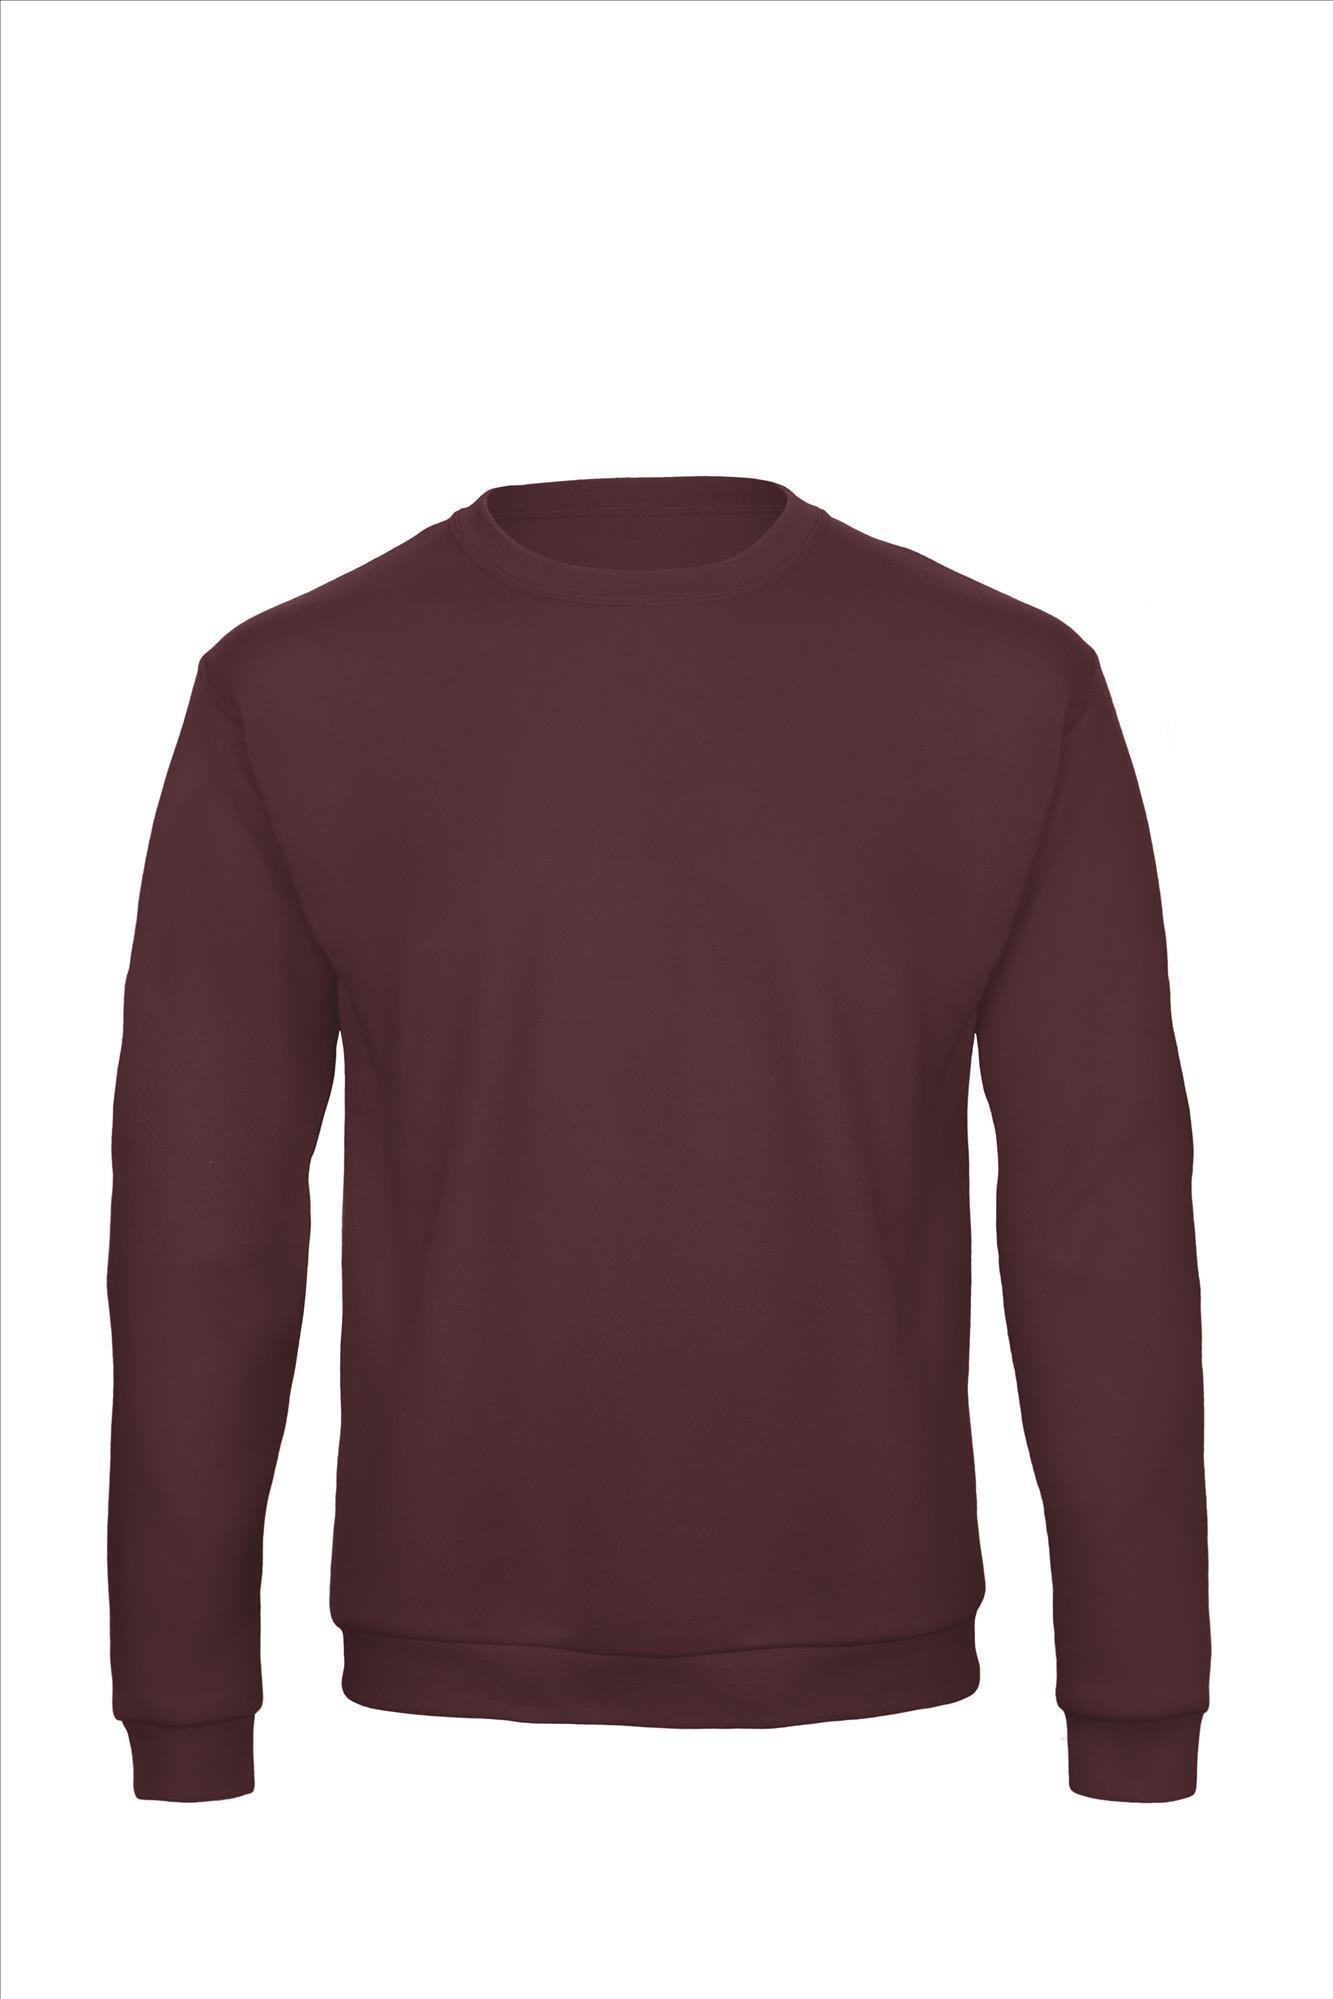 Sweater voor mannen budget burgundy rood